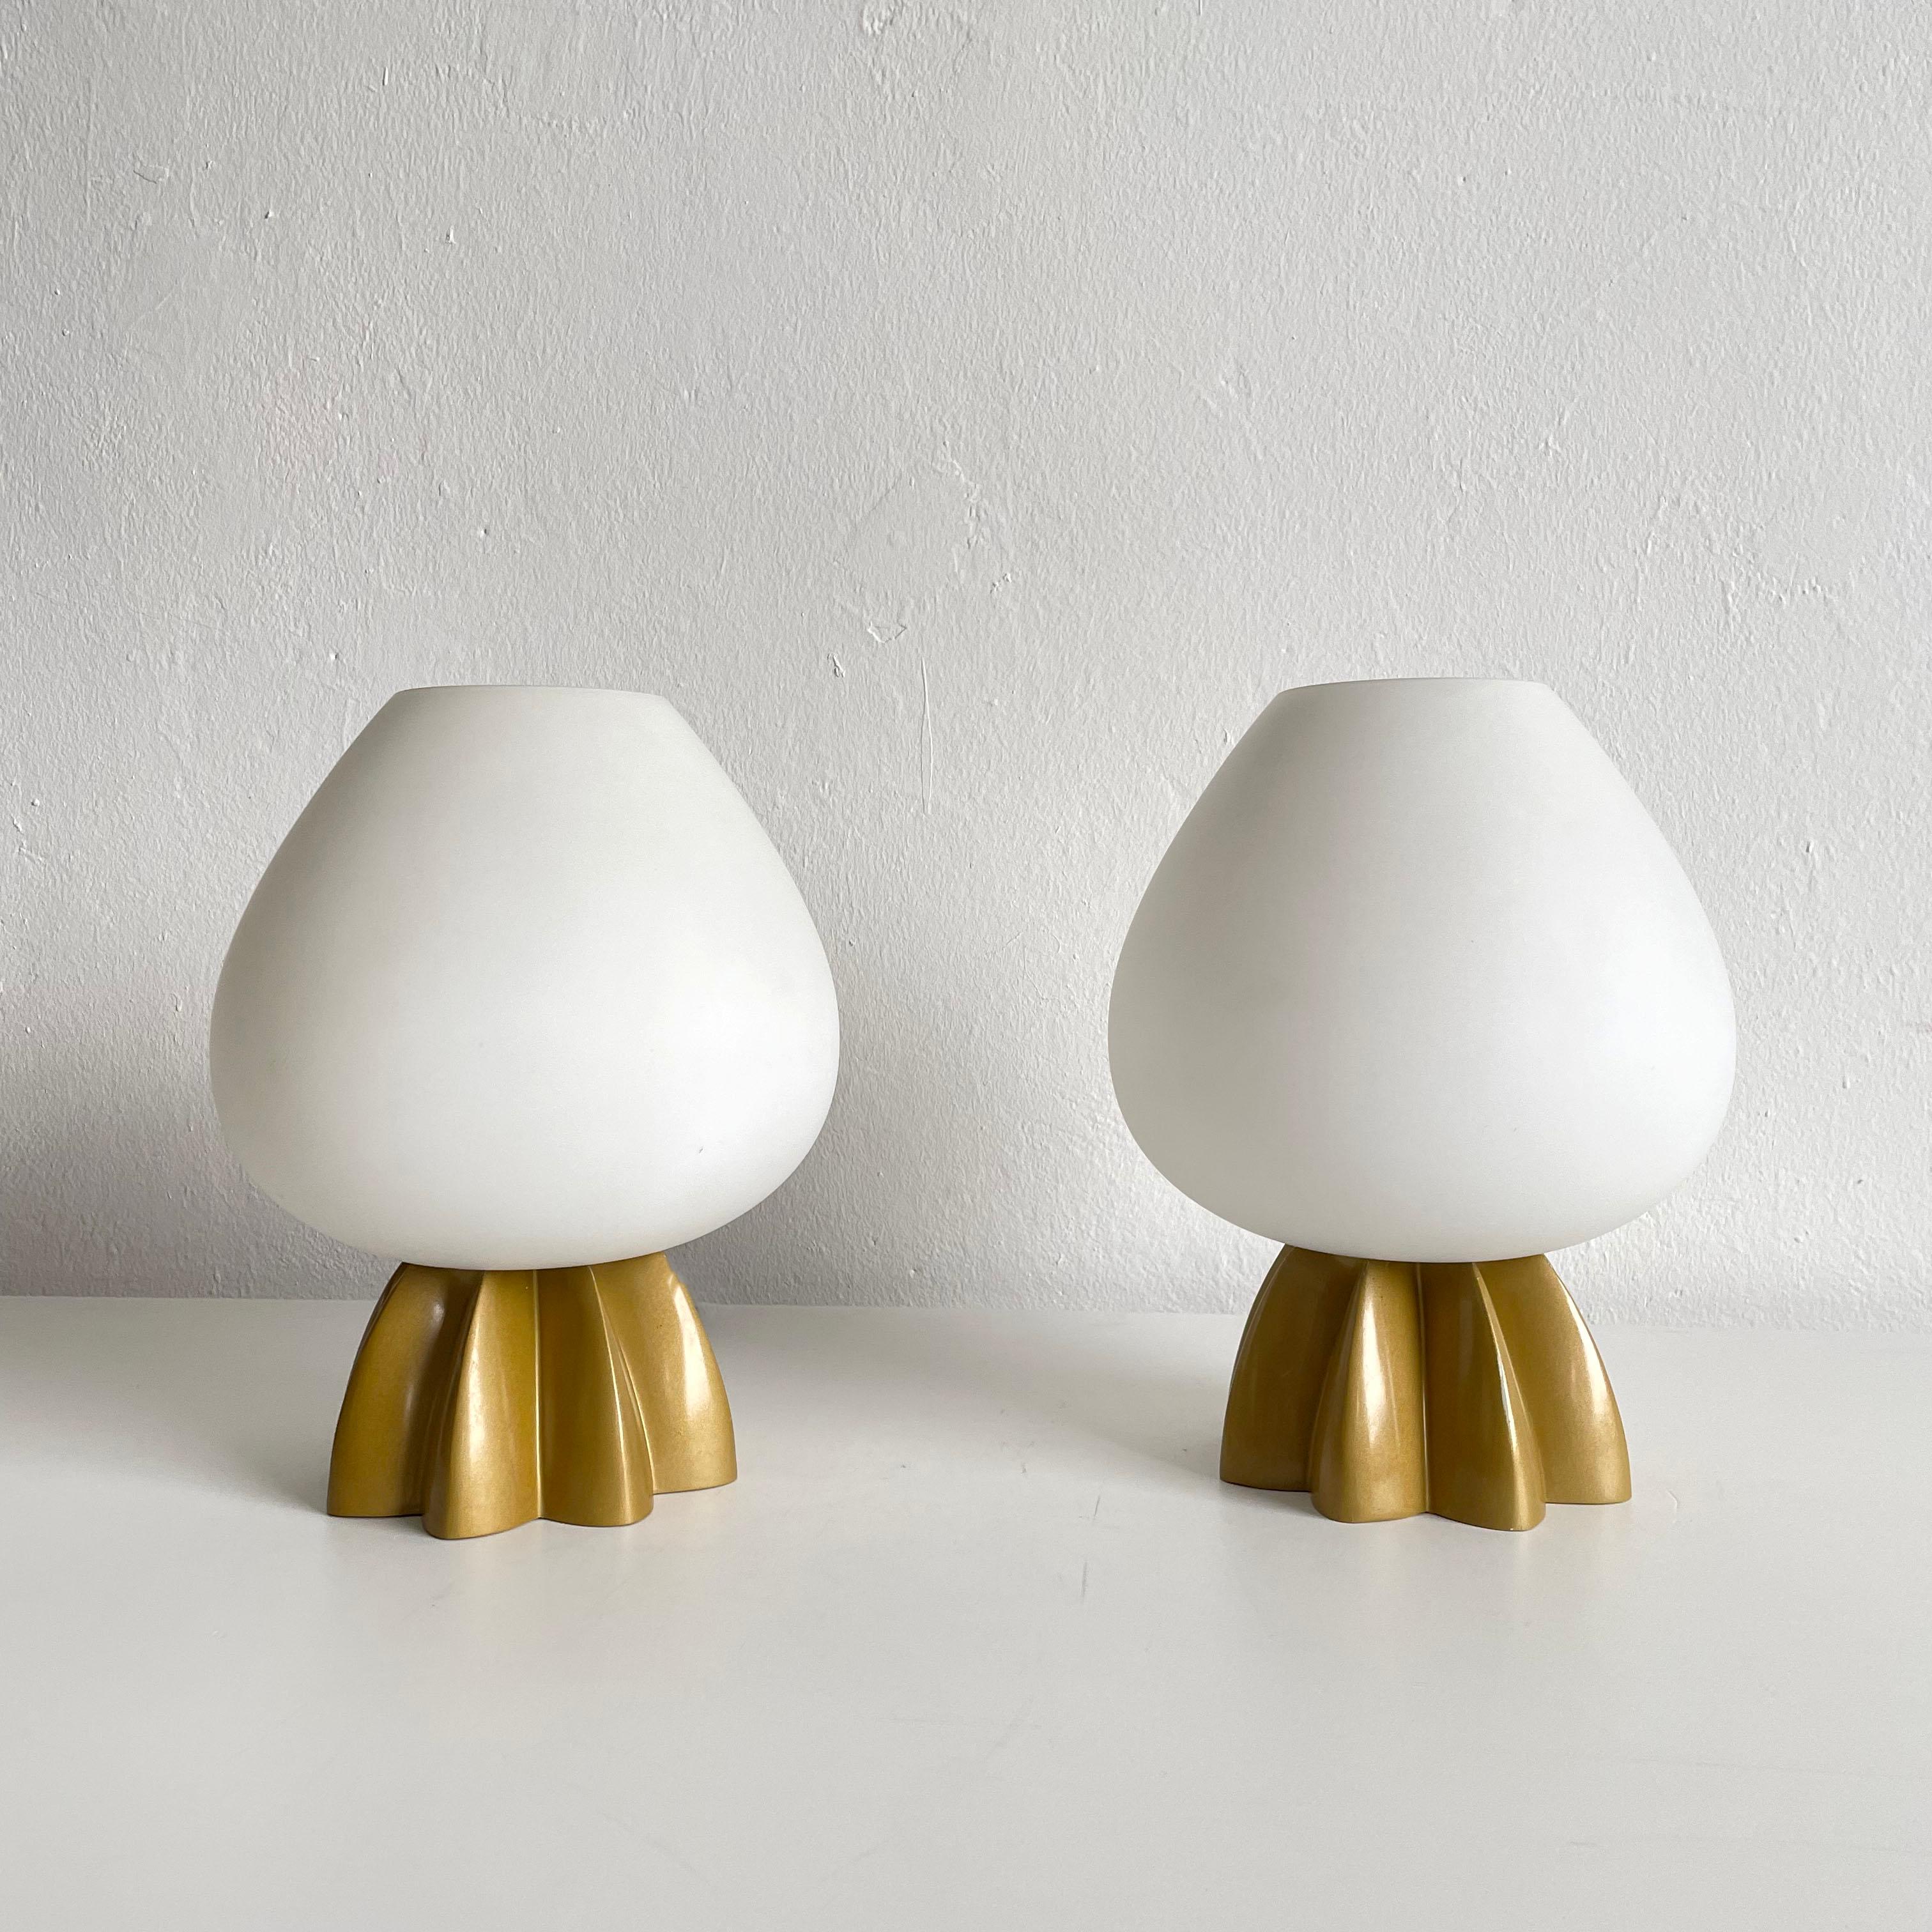 Set of 2 Foscarini Table Lamps, Model Fruits by Rodolfo Dordoni, Italy, 1980s For Sale 12